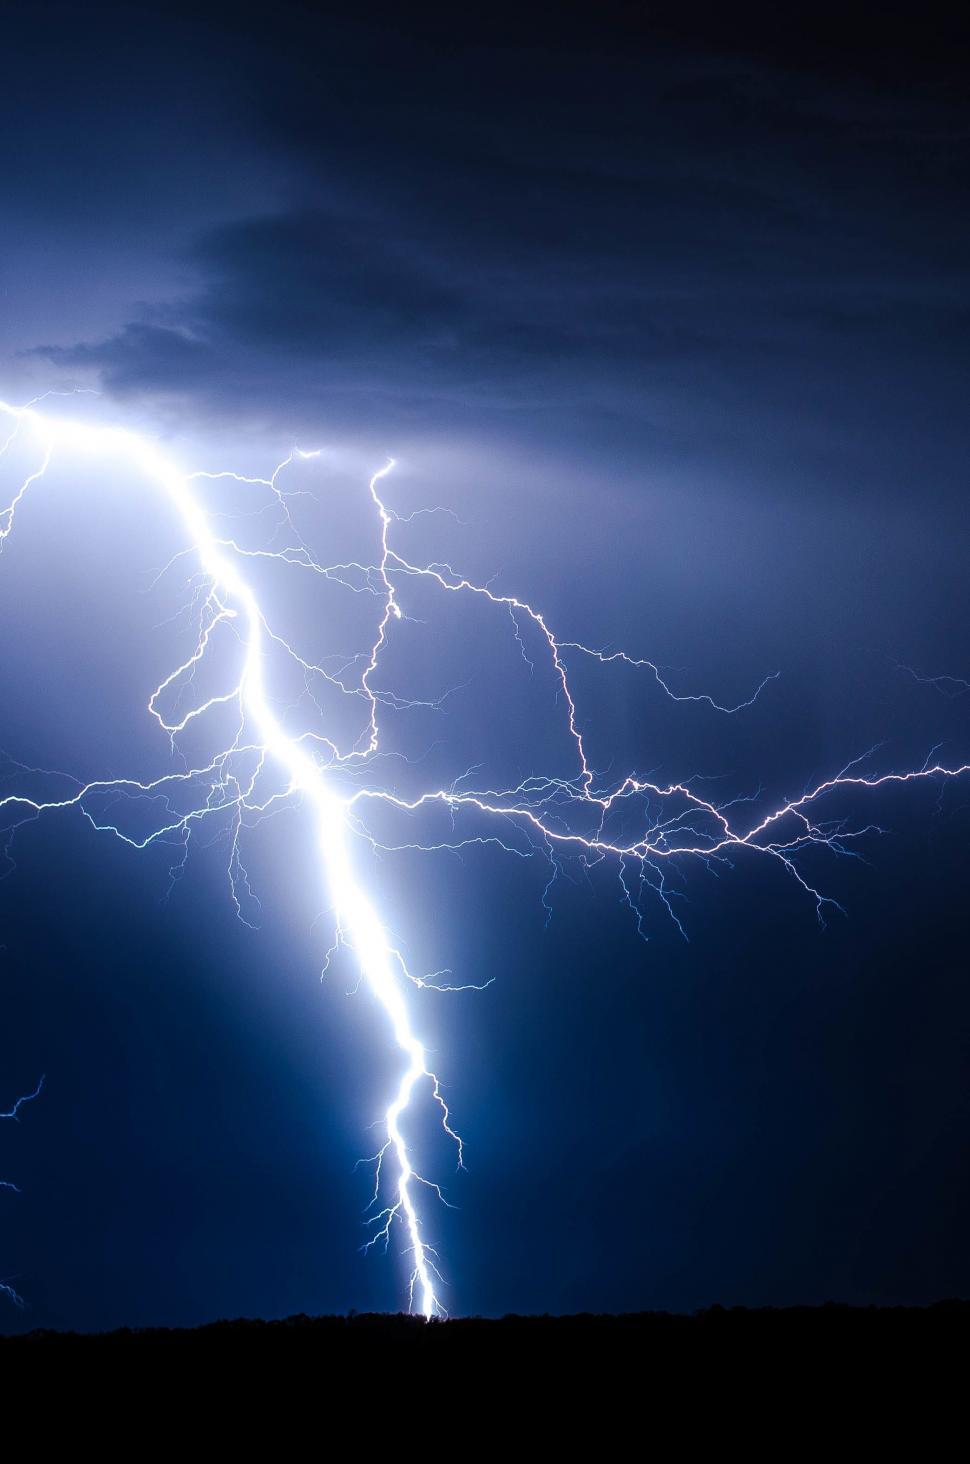 Free Image of Multiple Lightning Strikes in the Sky 